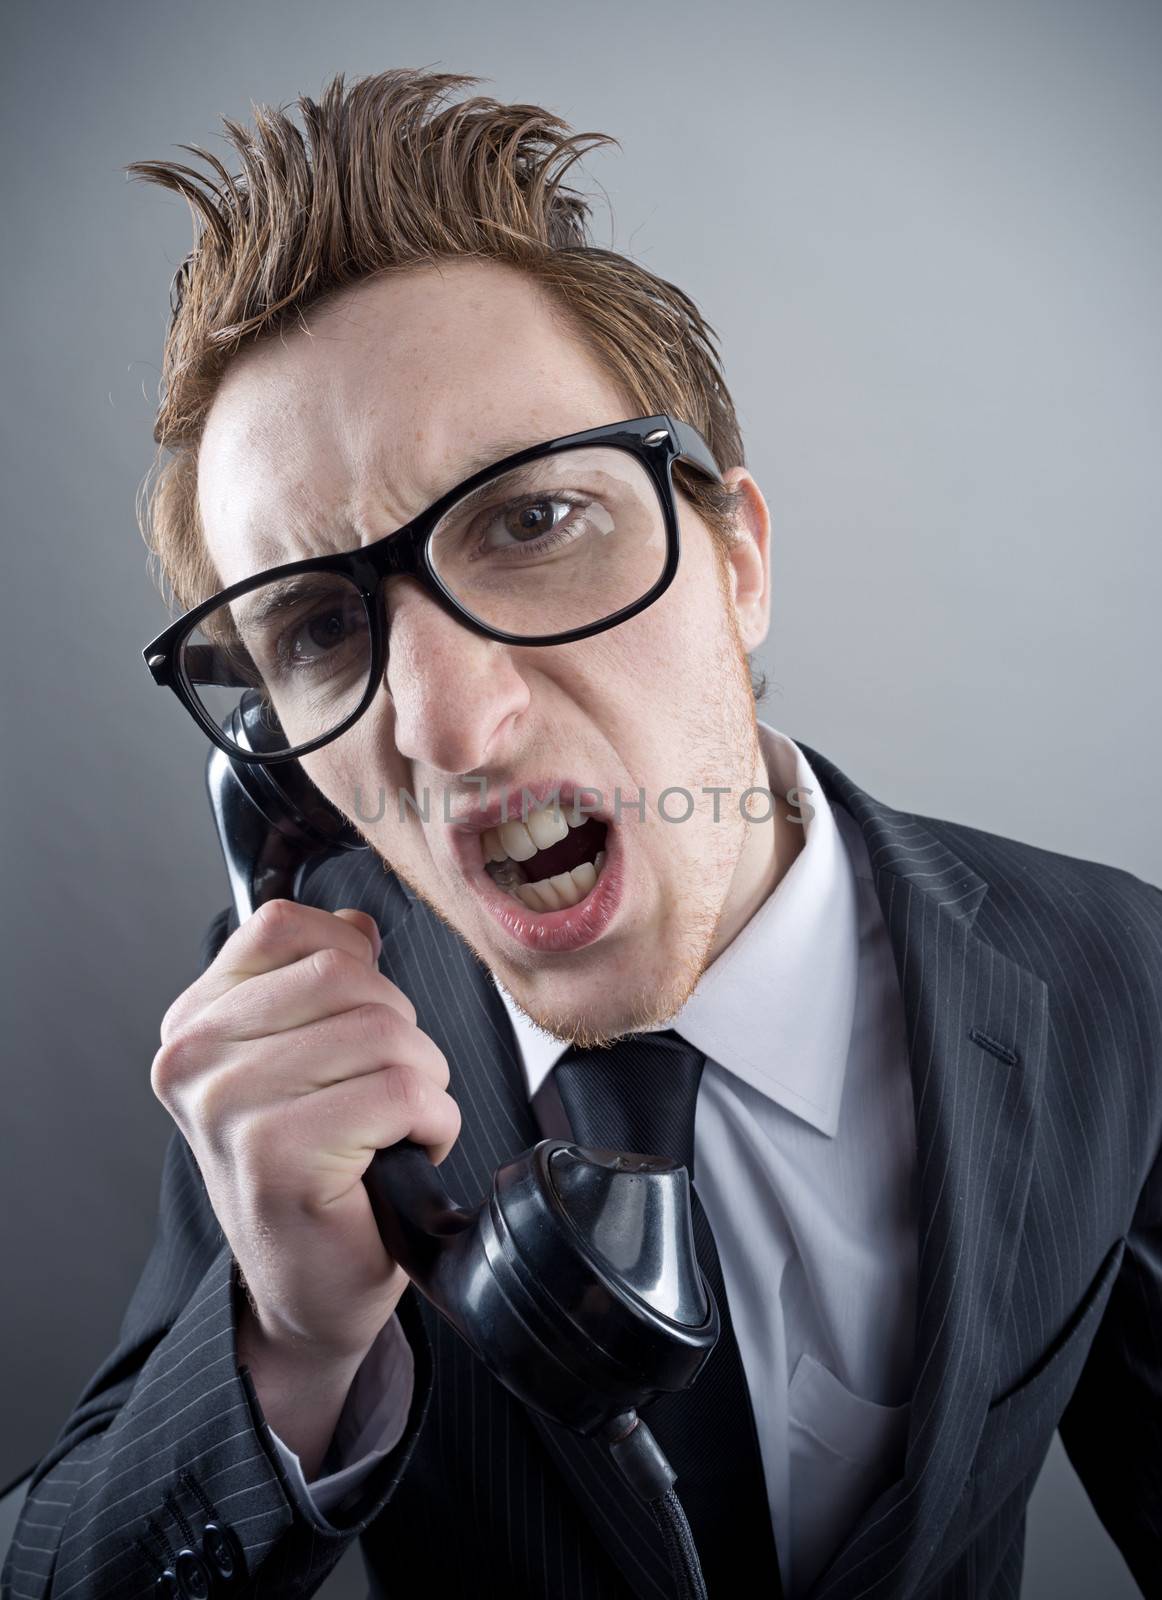 Angry nerd businessman retro telephone call shouting